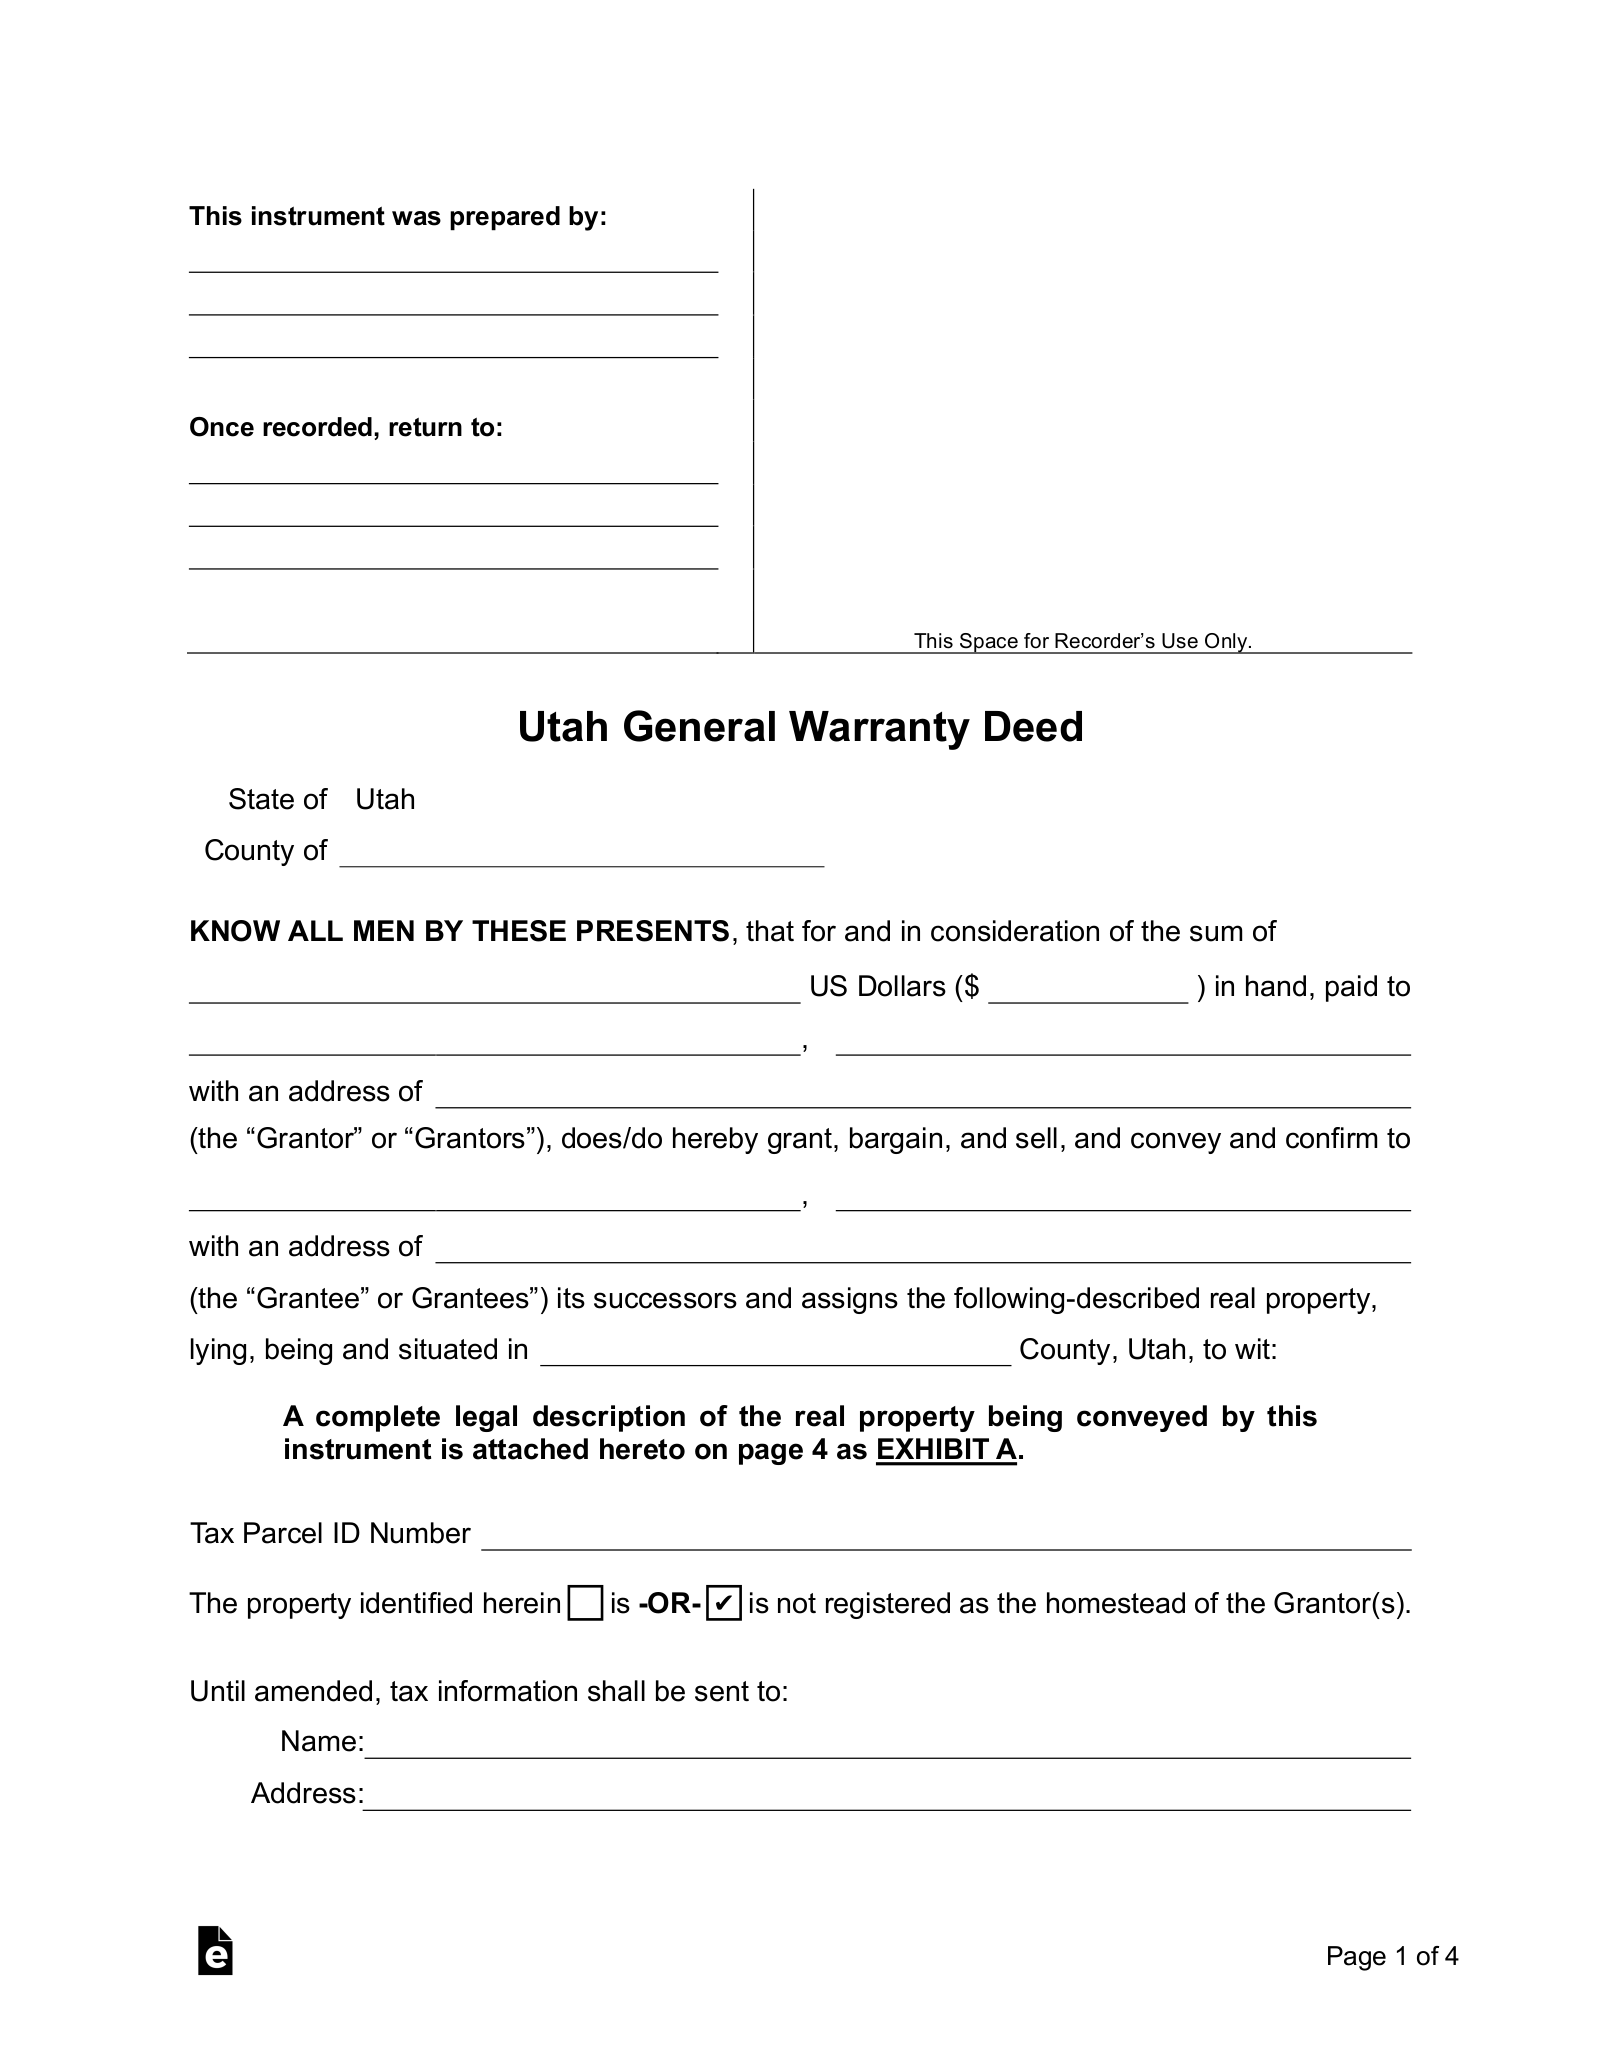 Utah General Warranty Deed Form